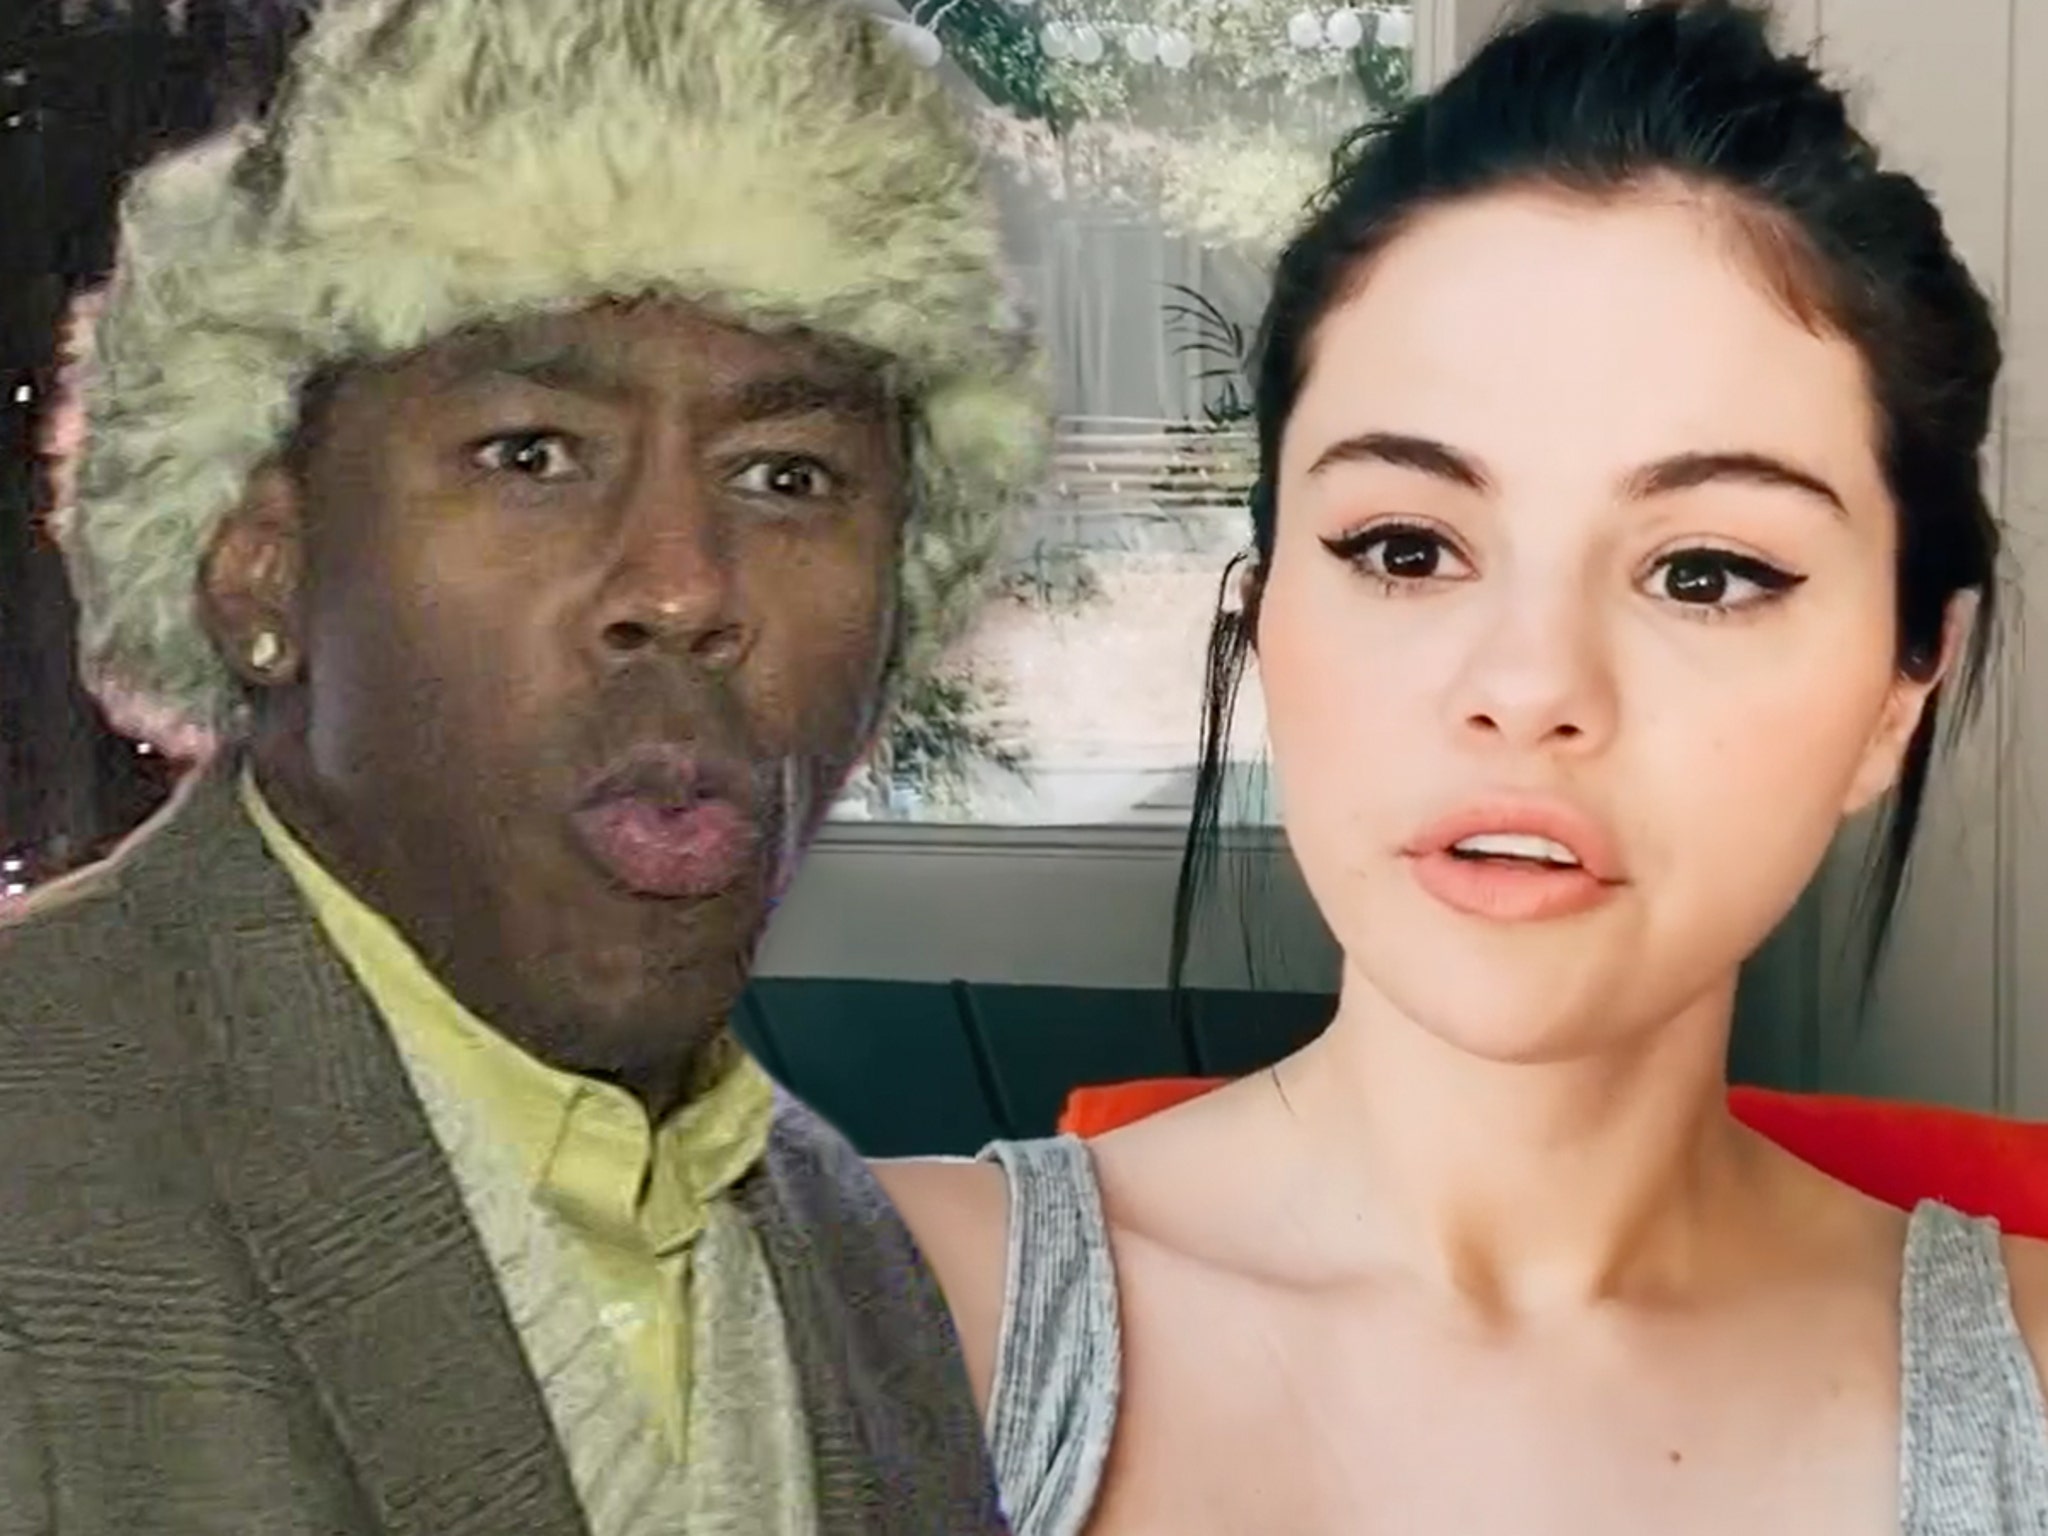 Tyler, the Creator Apologizes to Selena Gomez For Old, NSFW Tweets